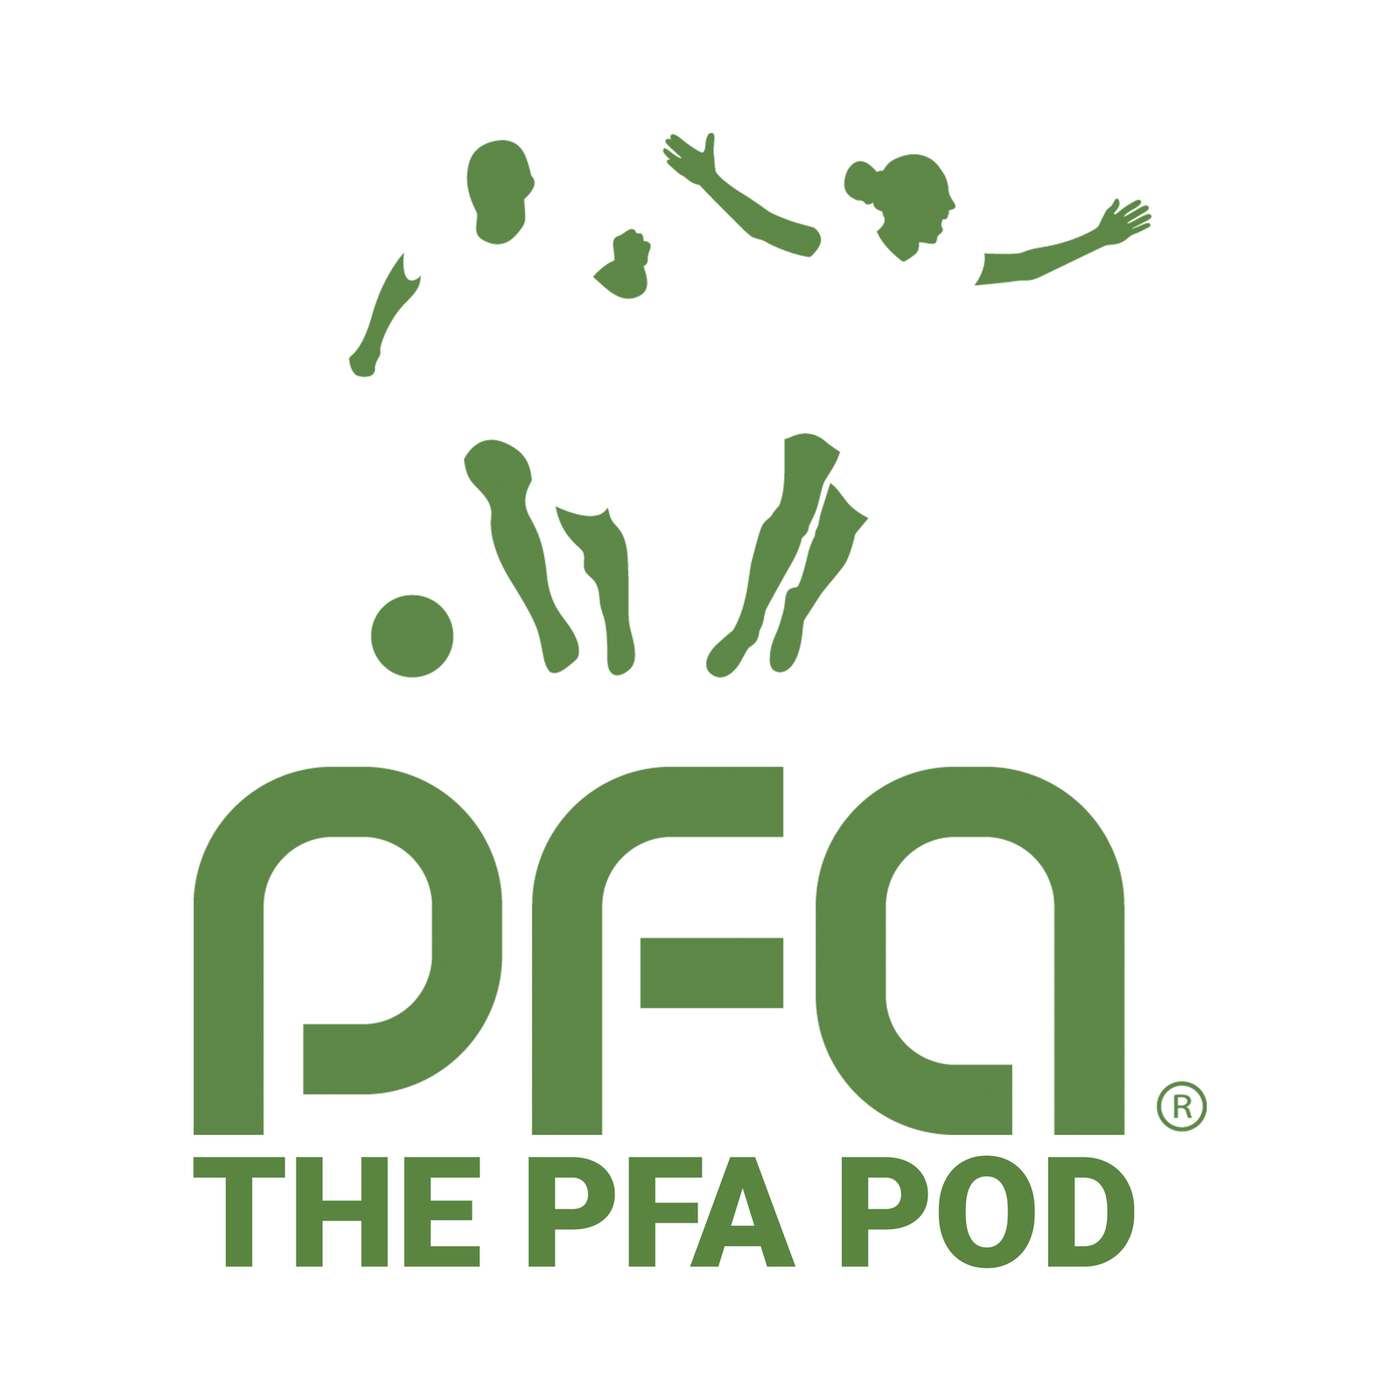 The PFA